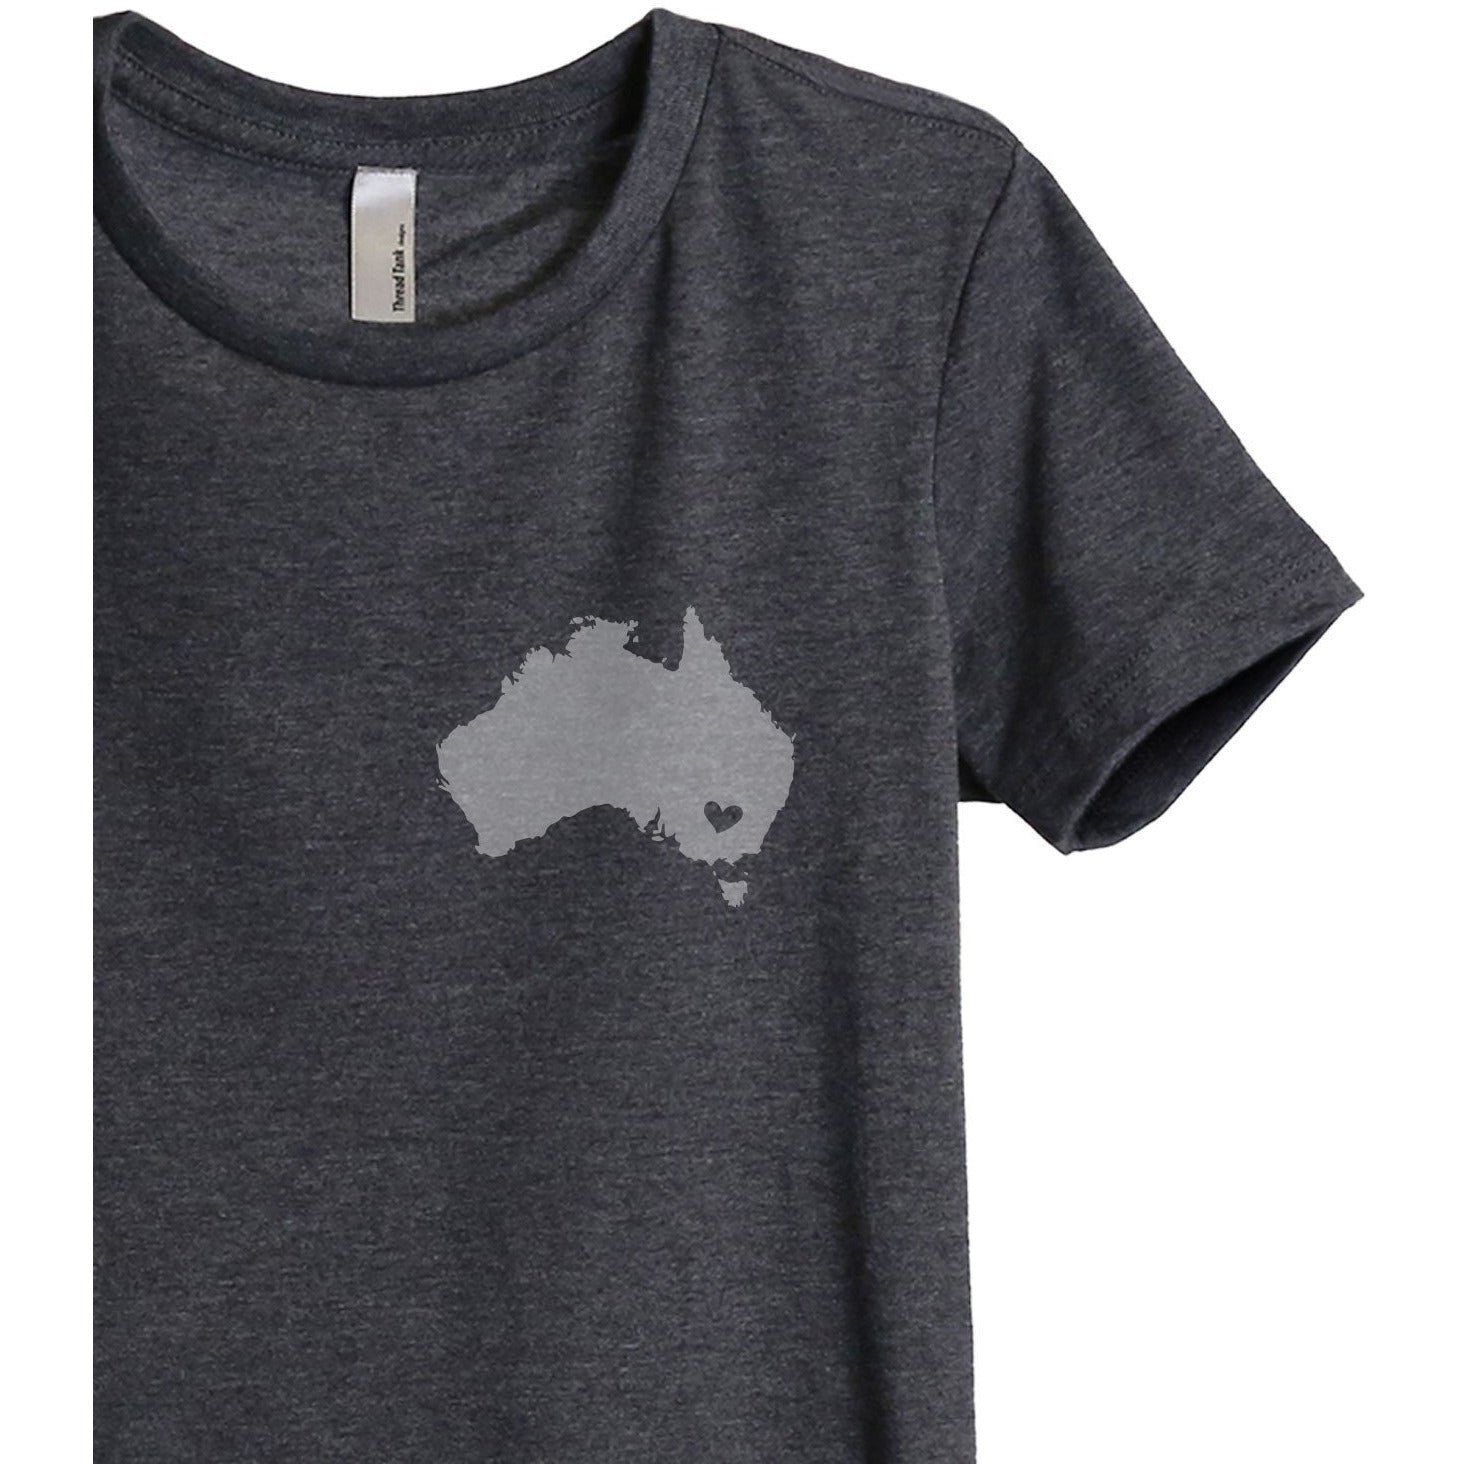 Australia Heart Women's Relaxed Crewneck T-Shirt Top Tee Charcoal Grey Zoom Details